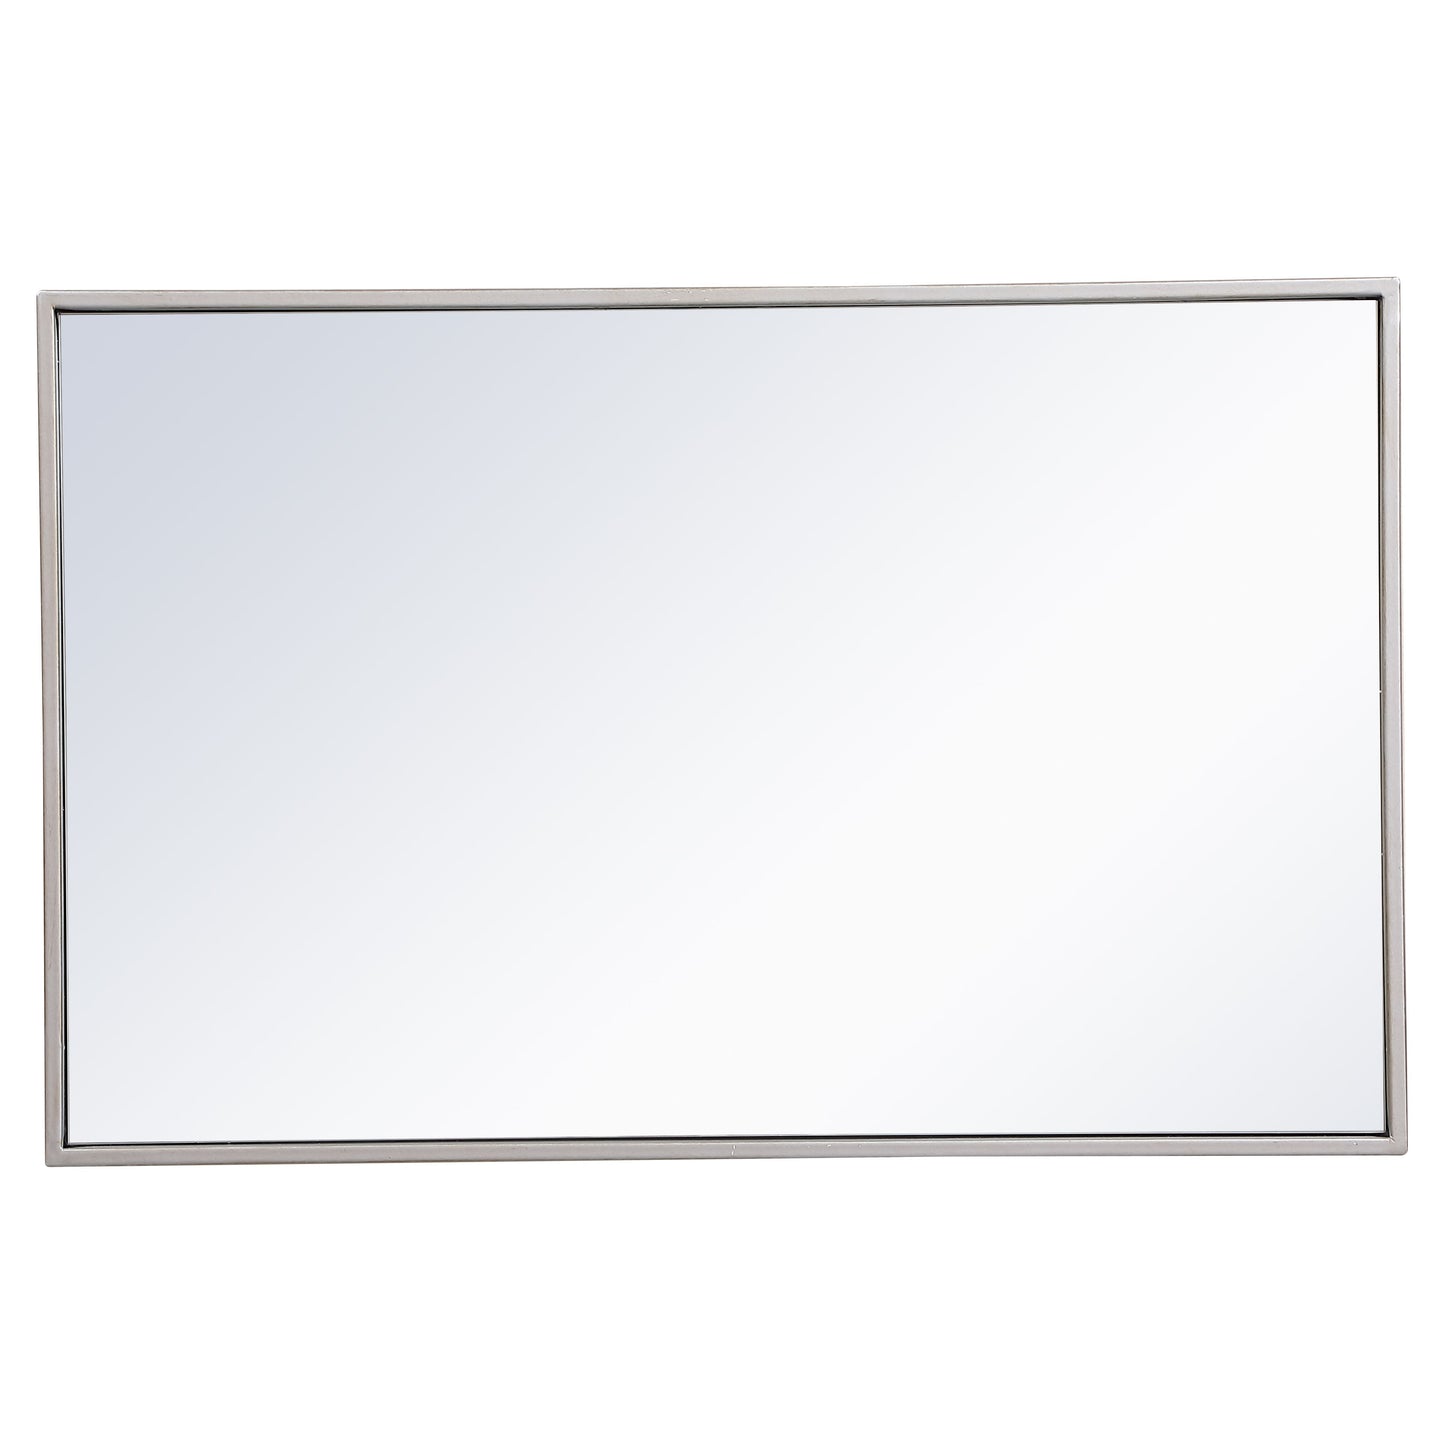 MR41828S Monet 28" x 18" Metal Framed Rectangular Mirror in Silver